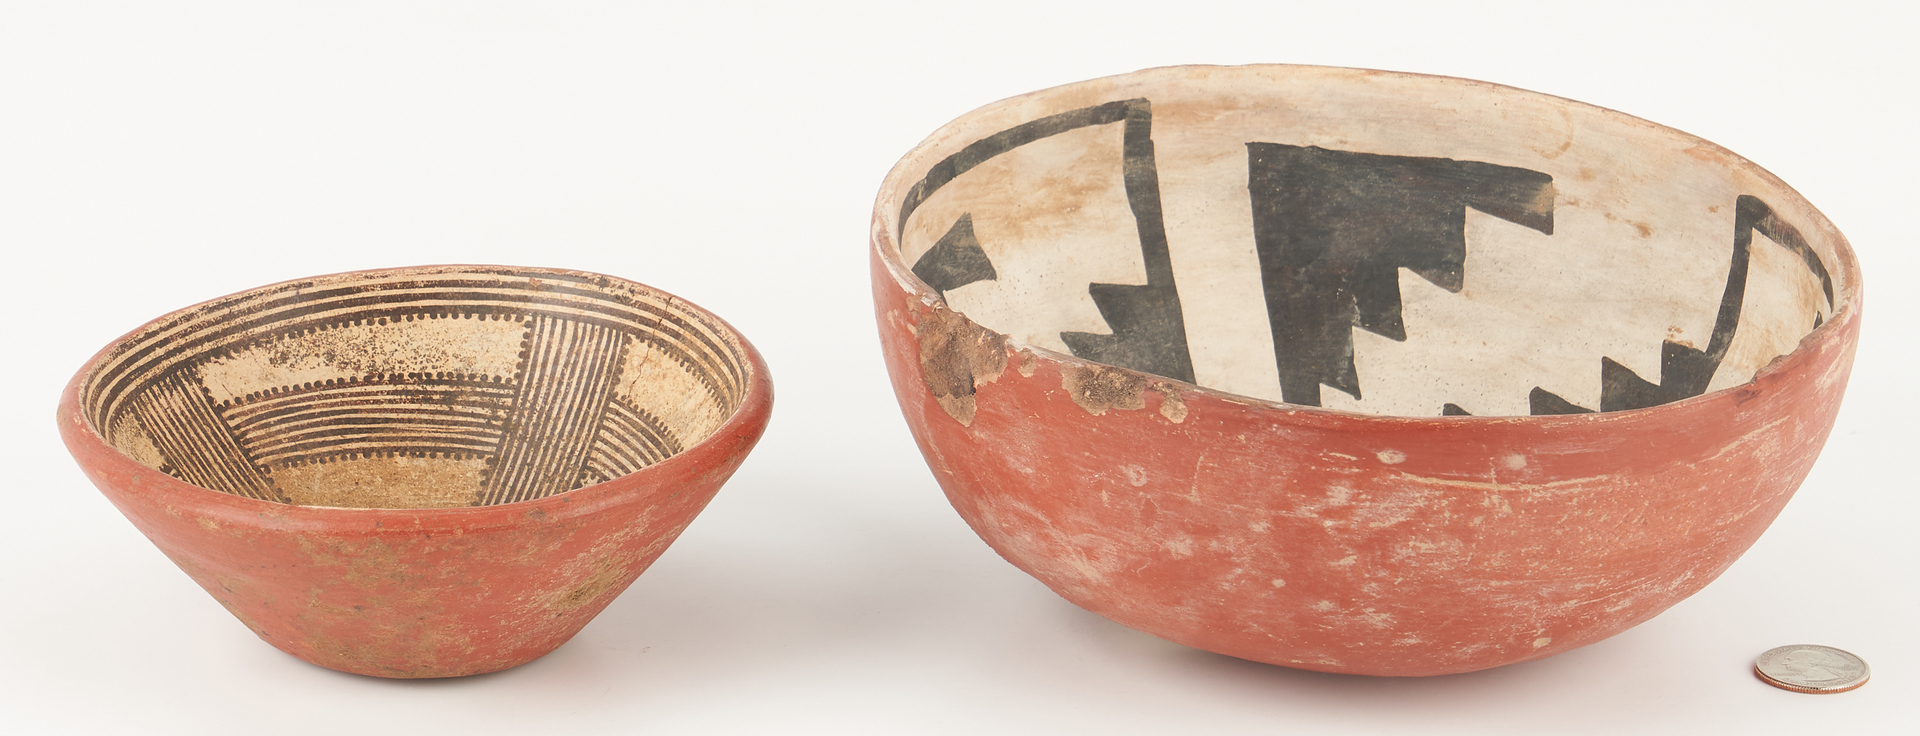 Lot 1111: 2 Native American Polychrome Pottery Bowls